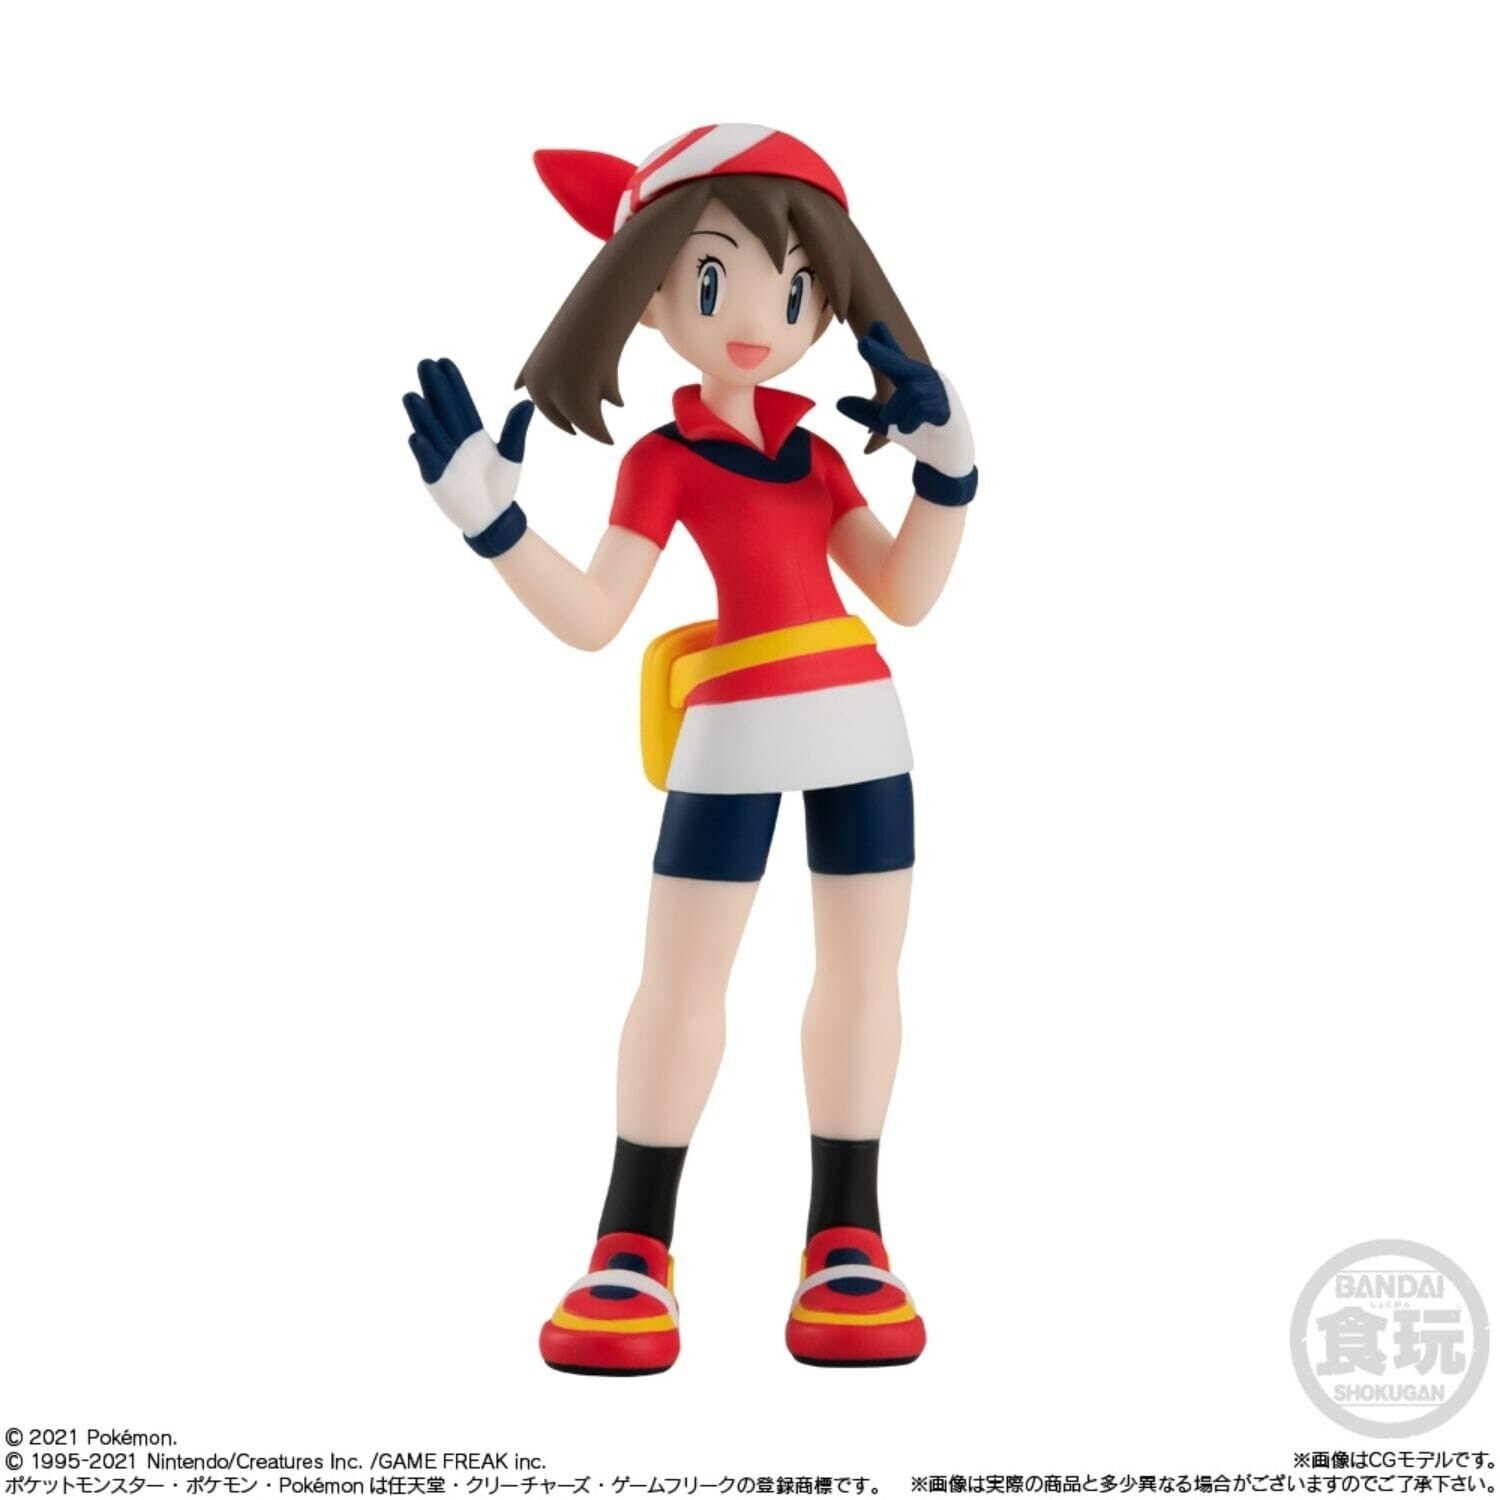 Pokemon 1/20 Scale World Hoenn Region 2 - May RS Ver. Figure 3inch Bandai Go